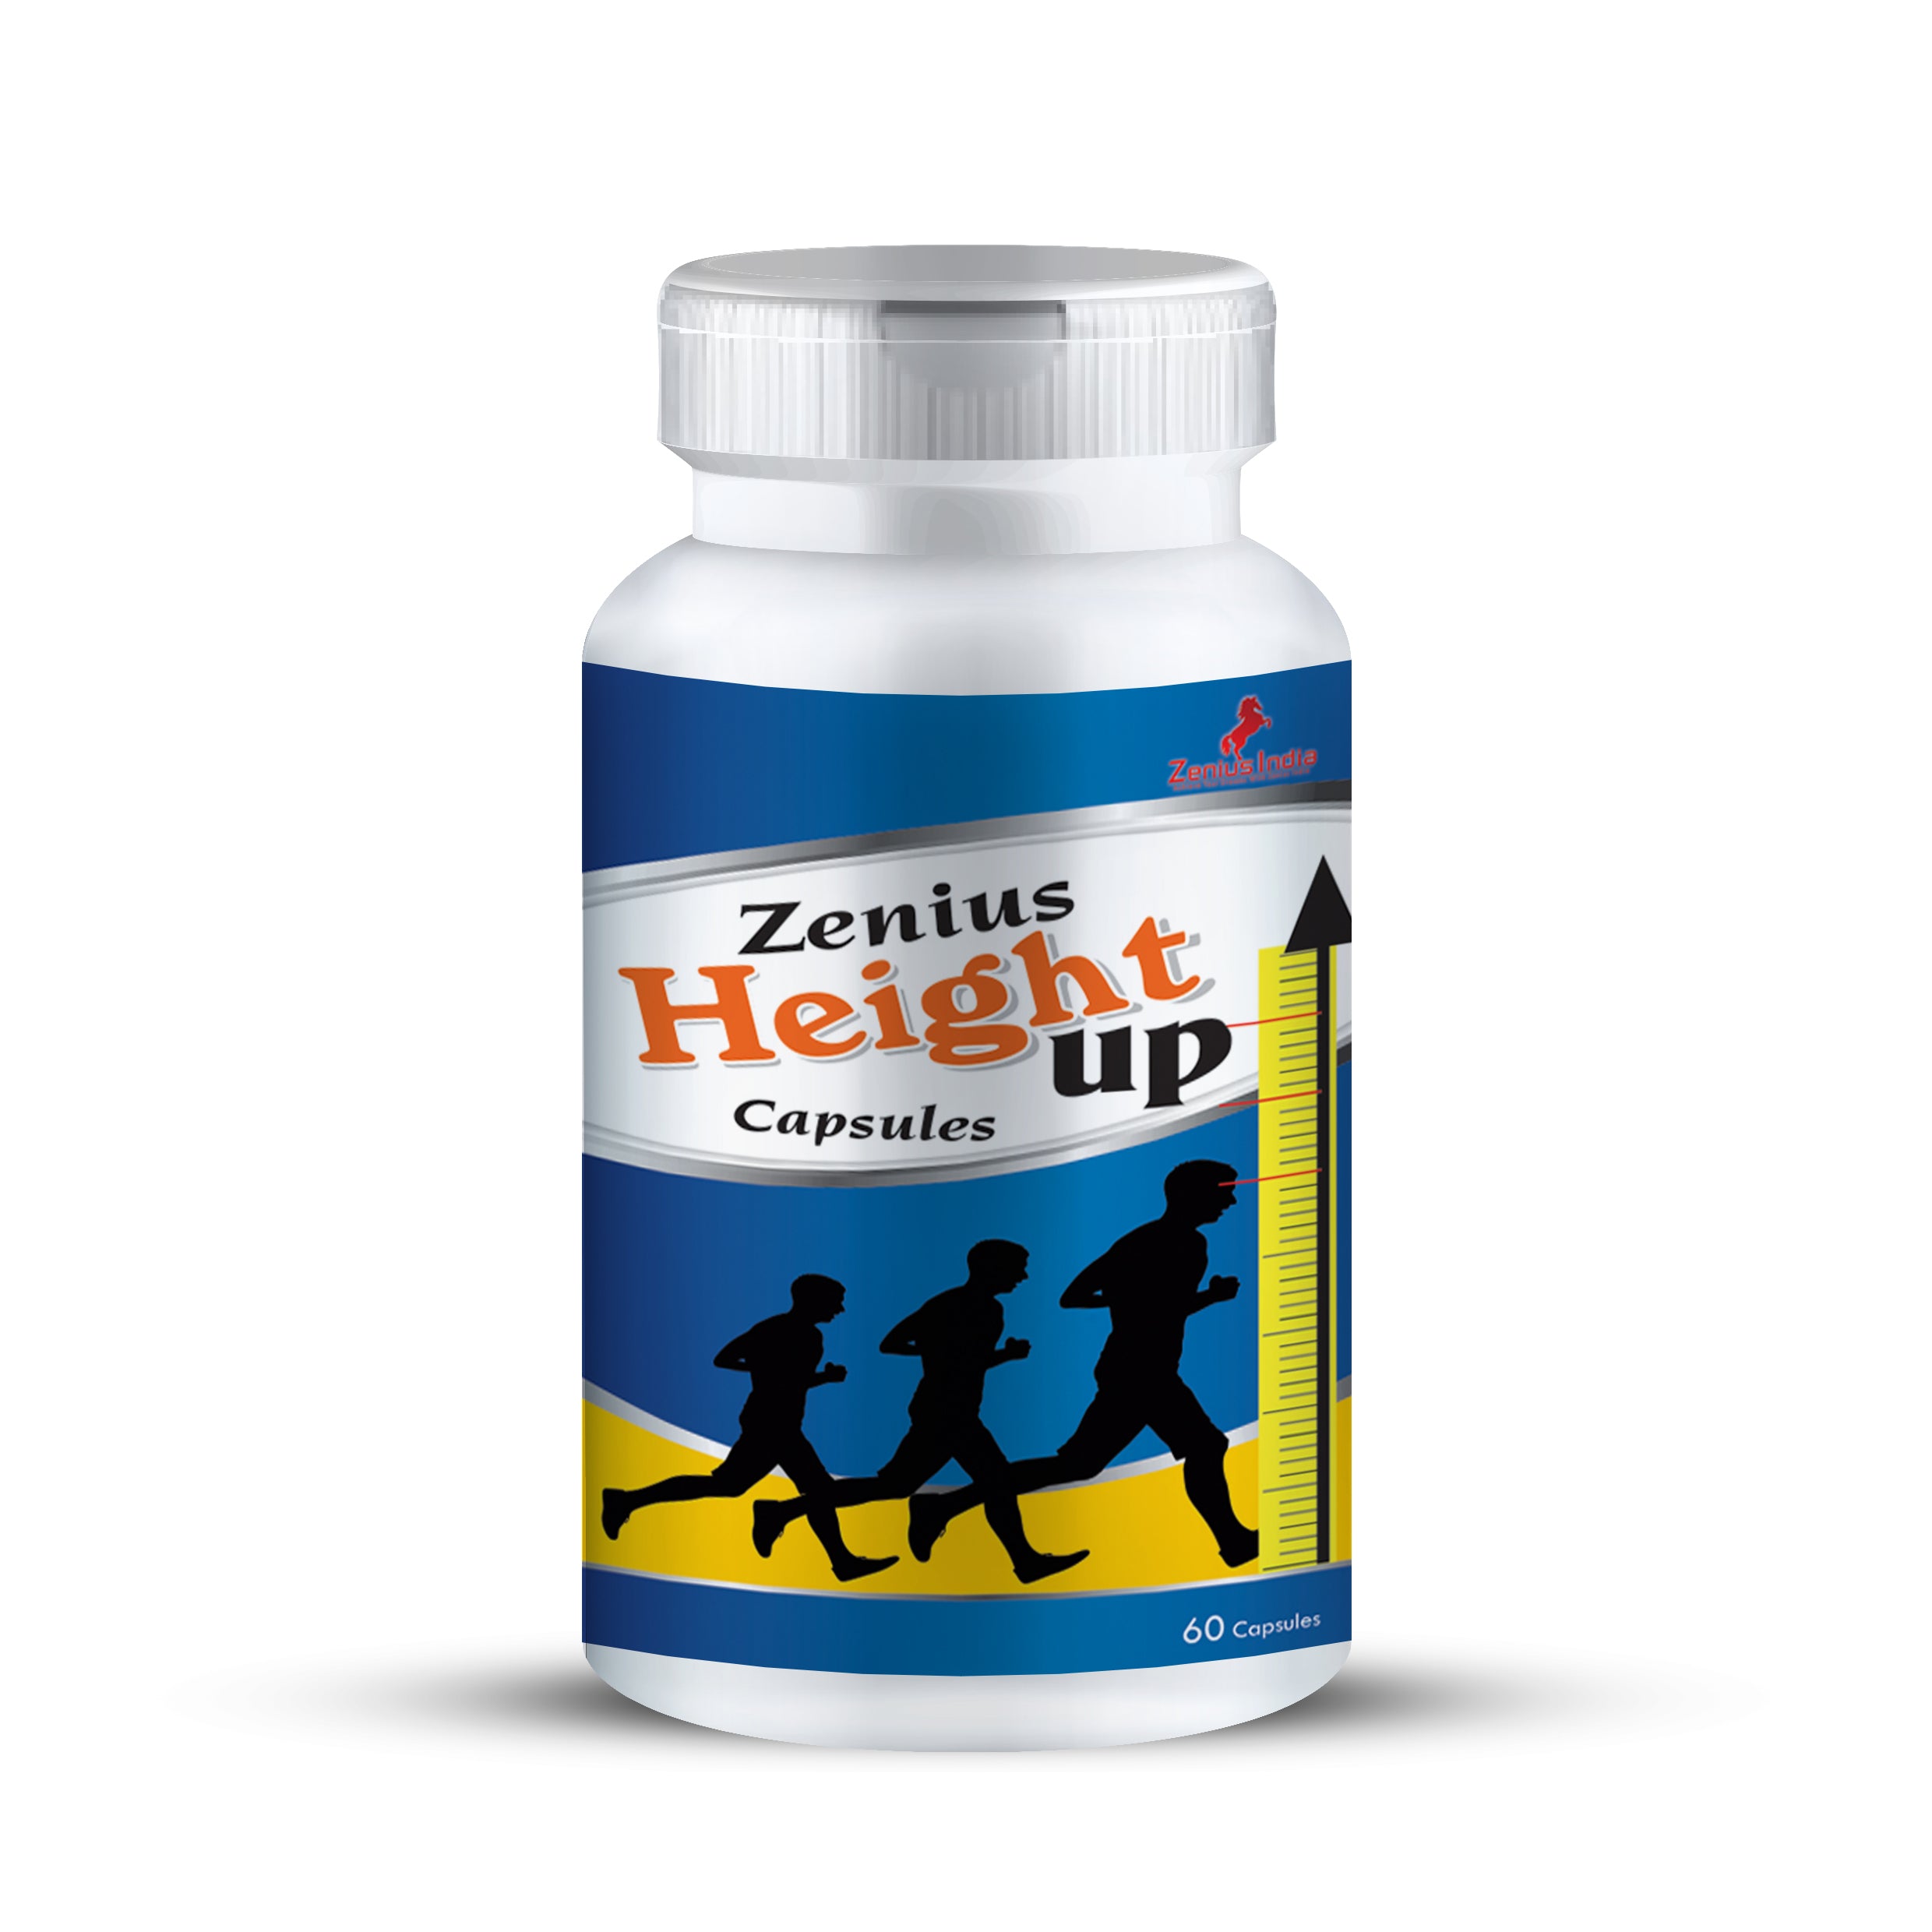 Zenius Height Up Capsule for height increase capsule | height enhancer medicine (60 Capsules)